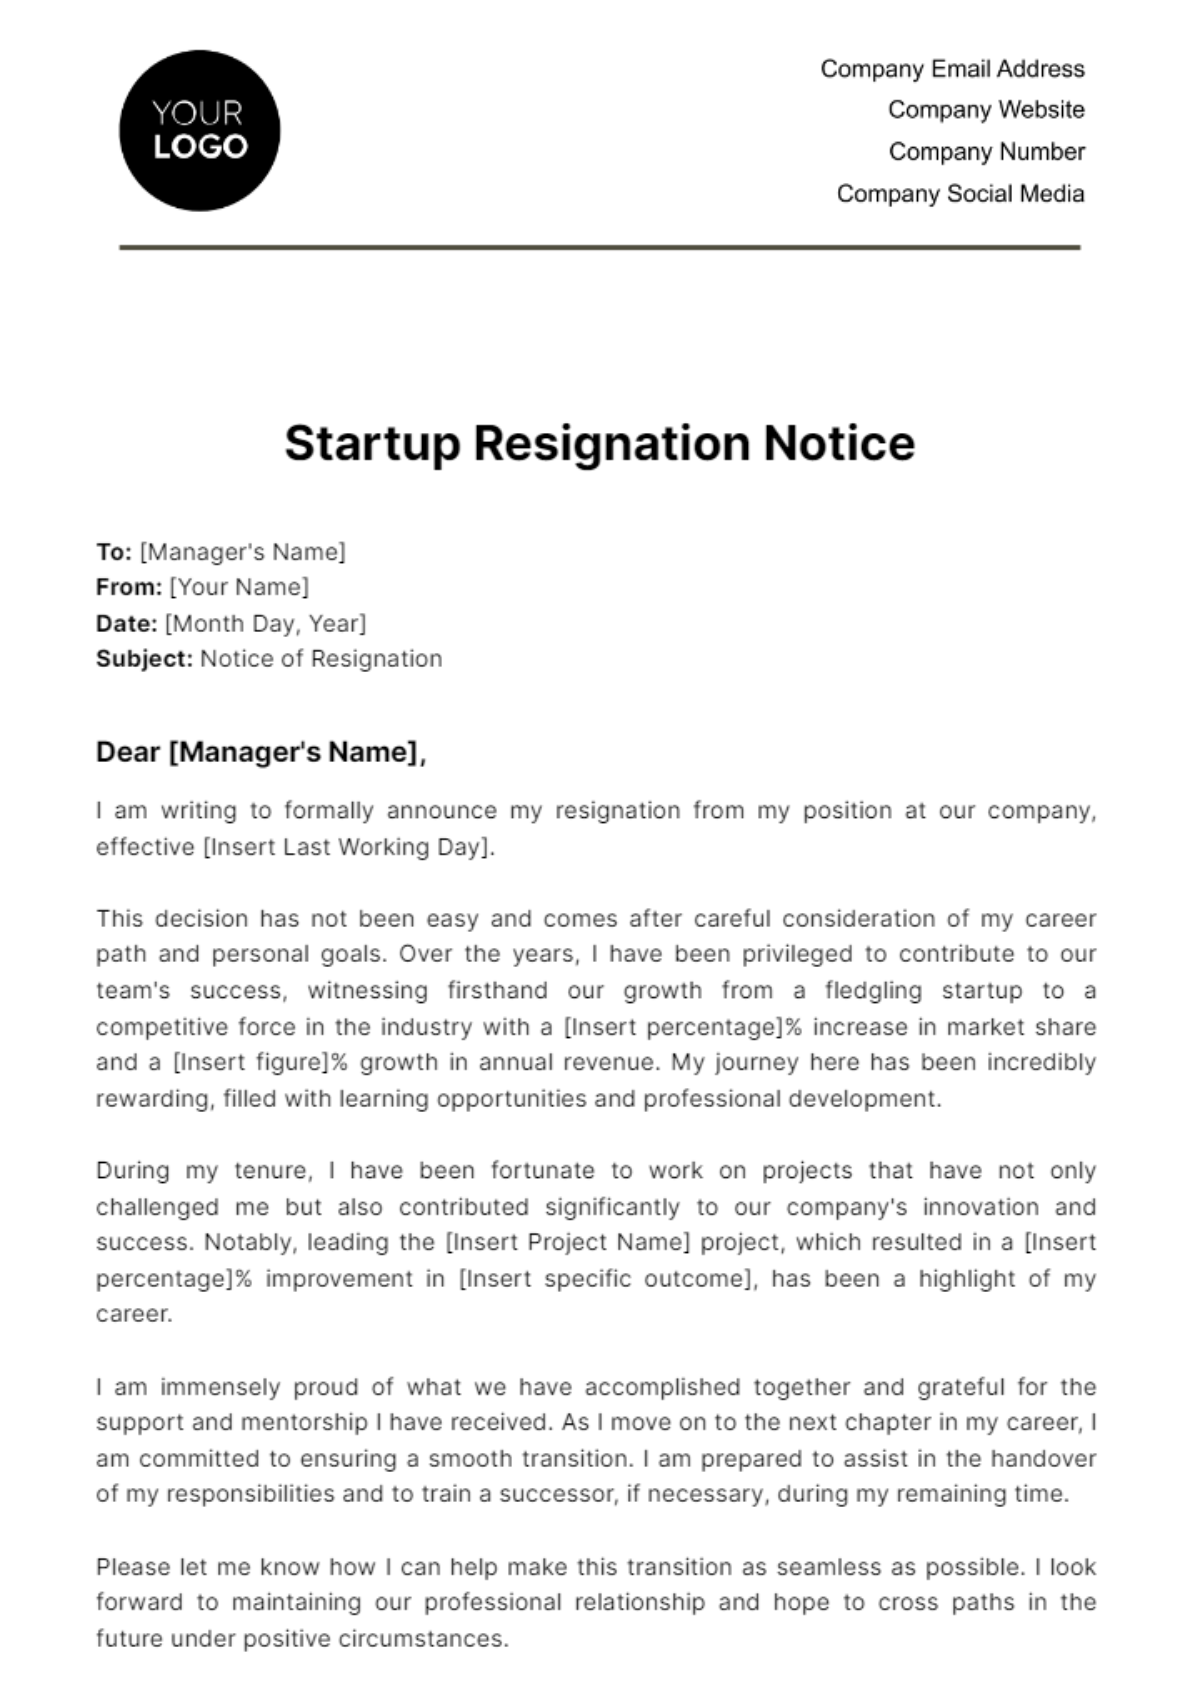 Free Startup Resignation Notice Template